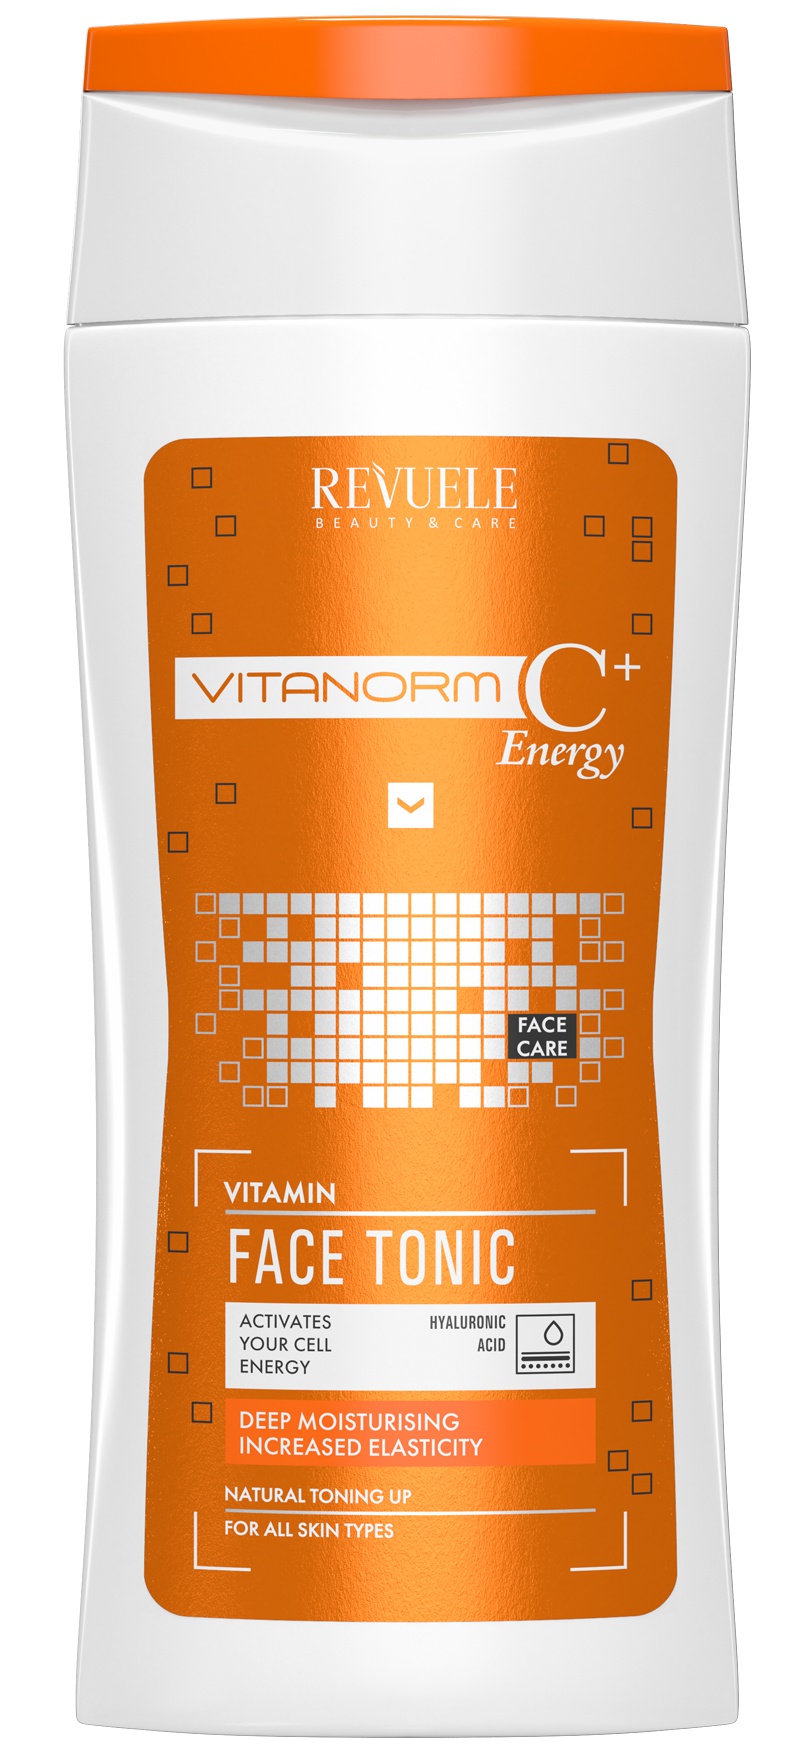 Revuele Vitanorm C+ Energy Vitamin Face Tonic